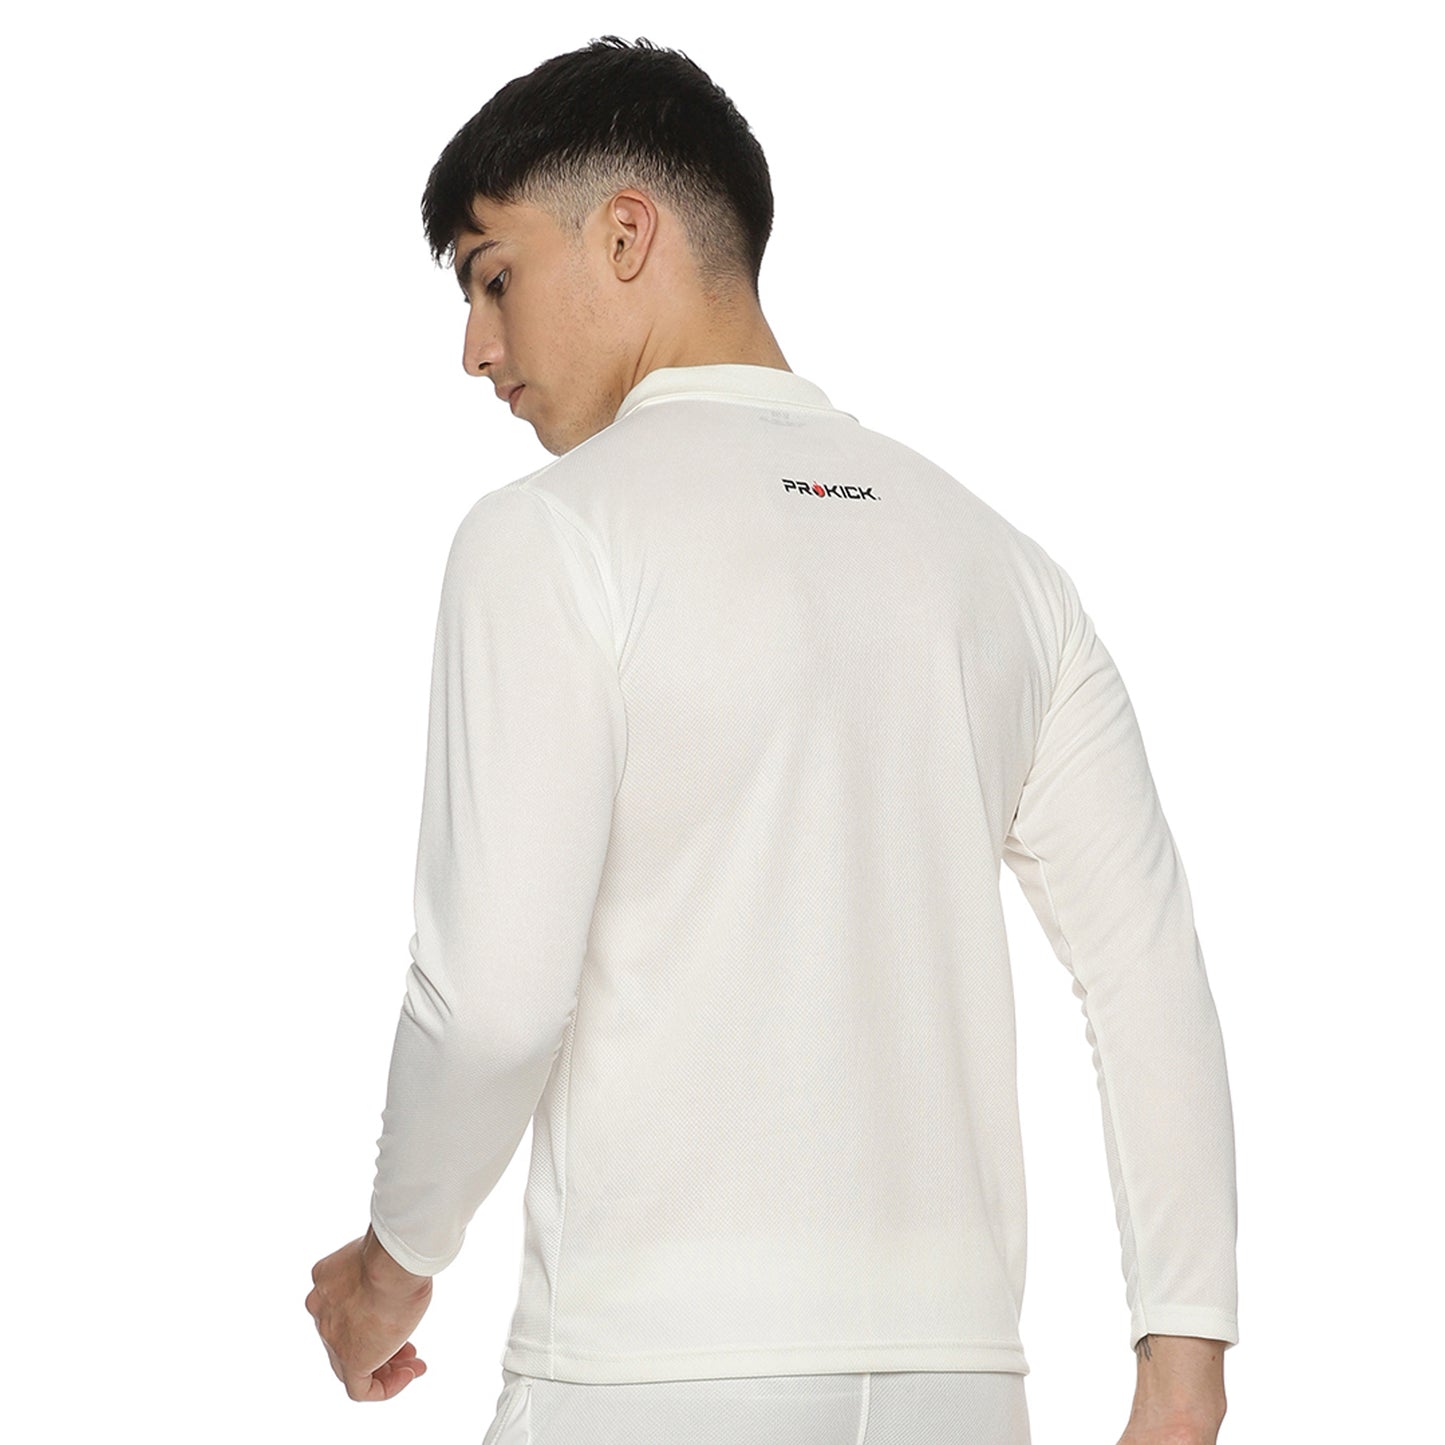 Prokick Elite Full Sleeves Cricket T-Shirt, Off White - Best Price online Prokicksports.com